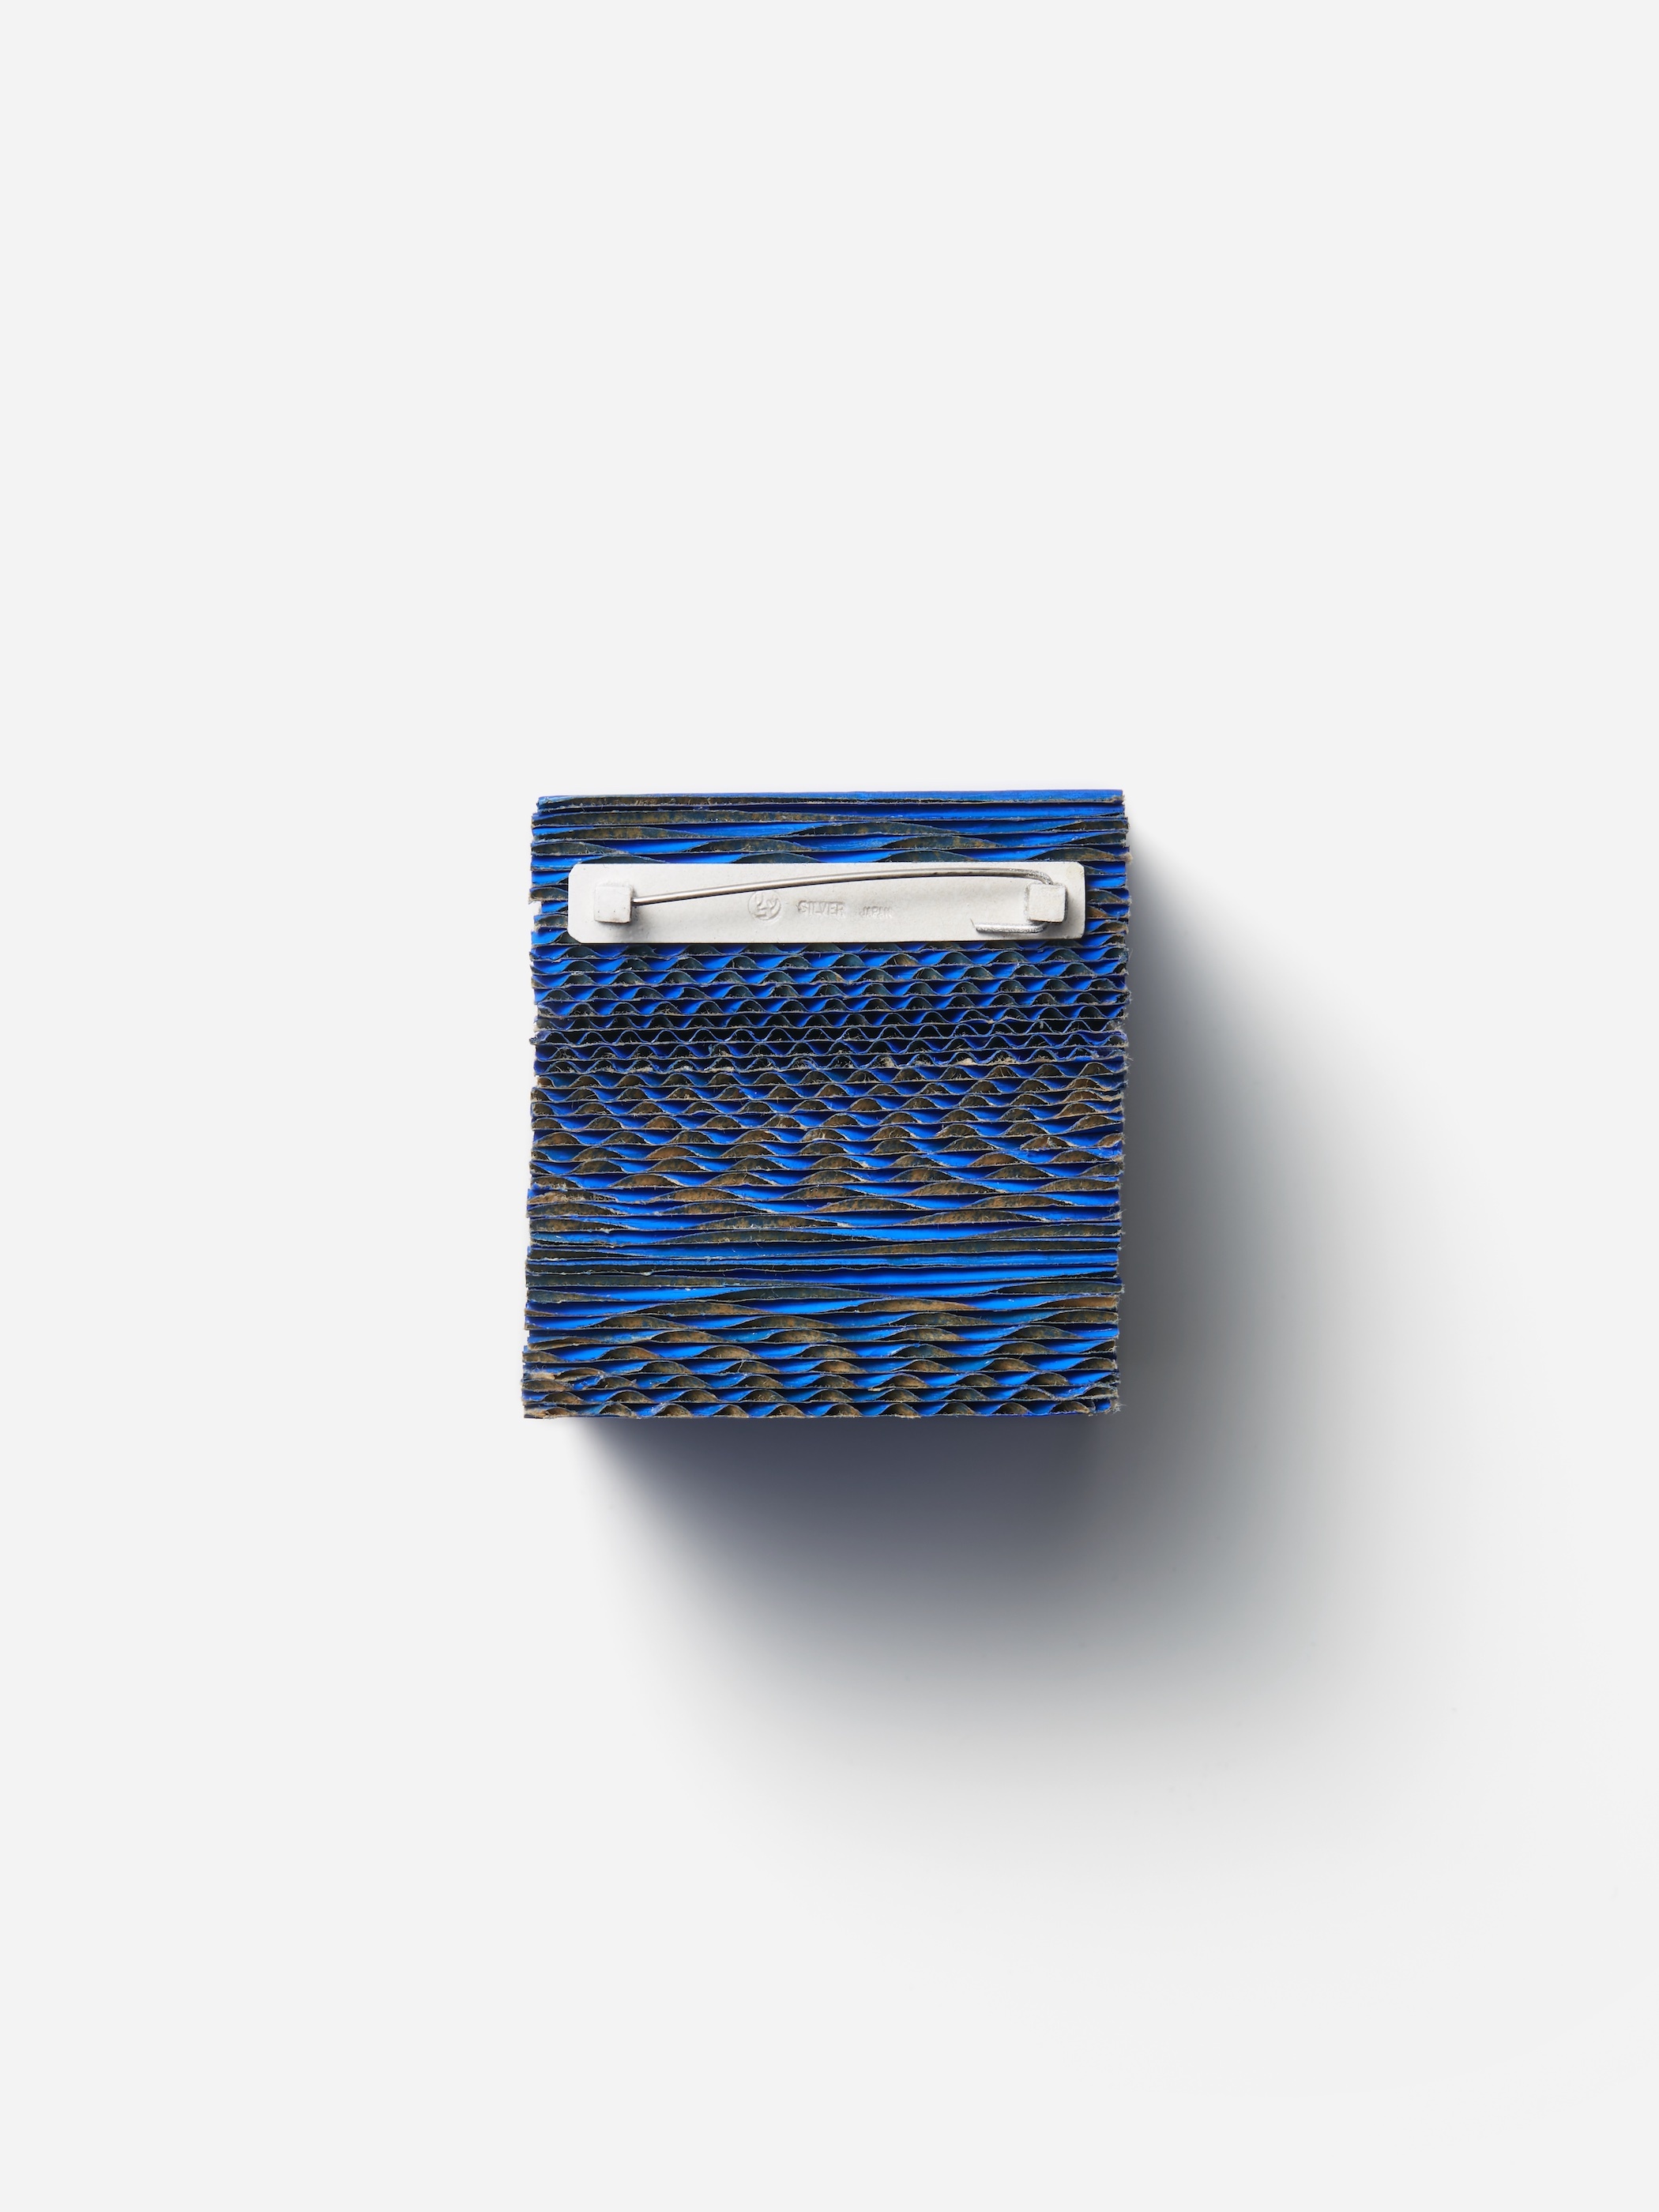 Ritsuko Ogura / Blue cube / Brooch - gallery deux poissons online